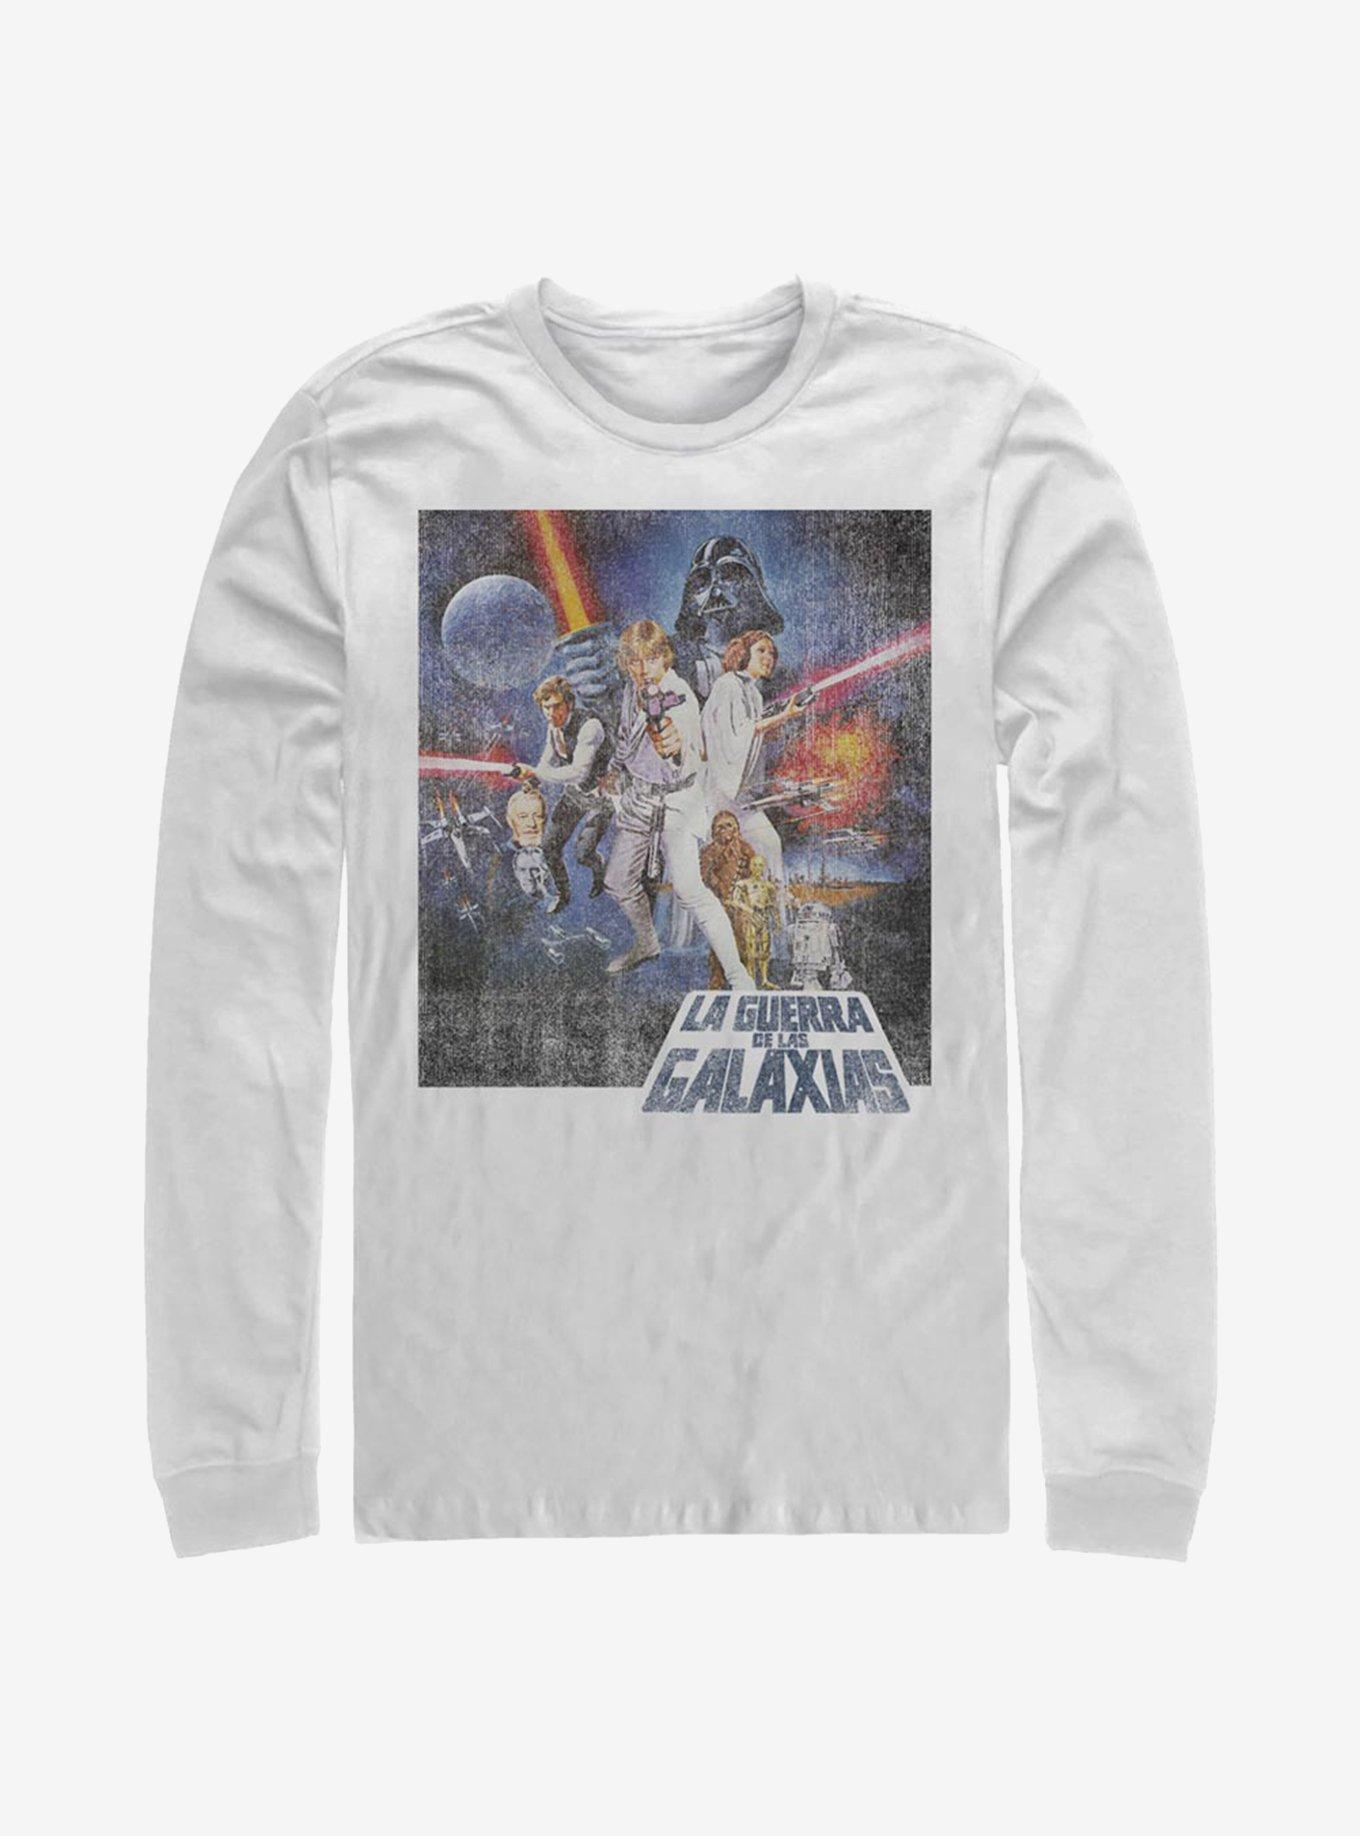 Star Wars Episode IV A New Hope La Guerra De Las Galaxias Poster Long-Sleeve T-Shirt, WHITE, hi-res